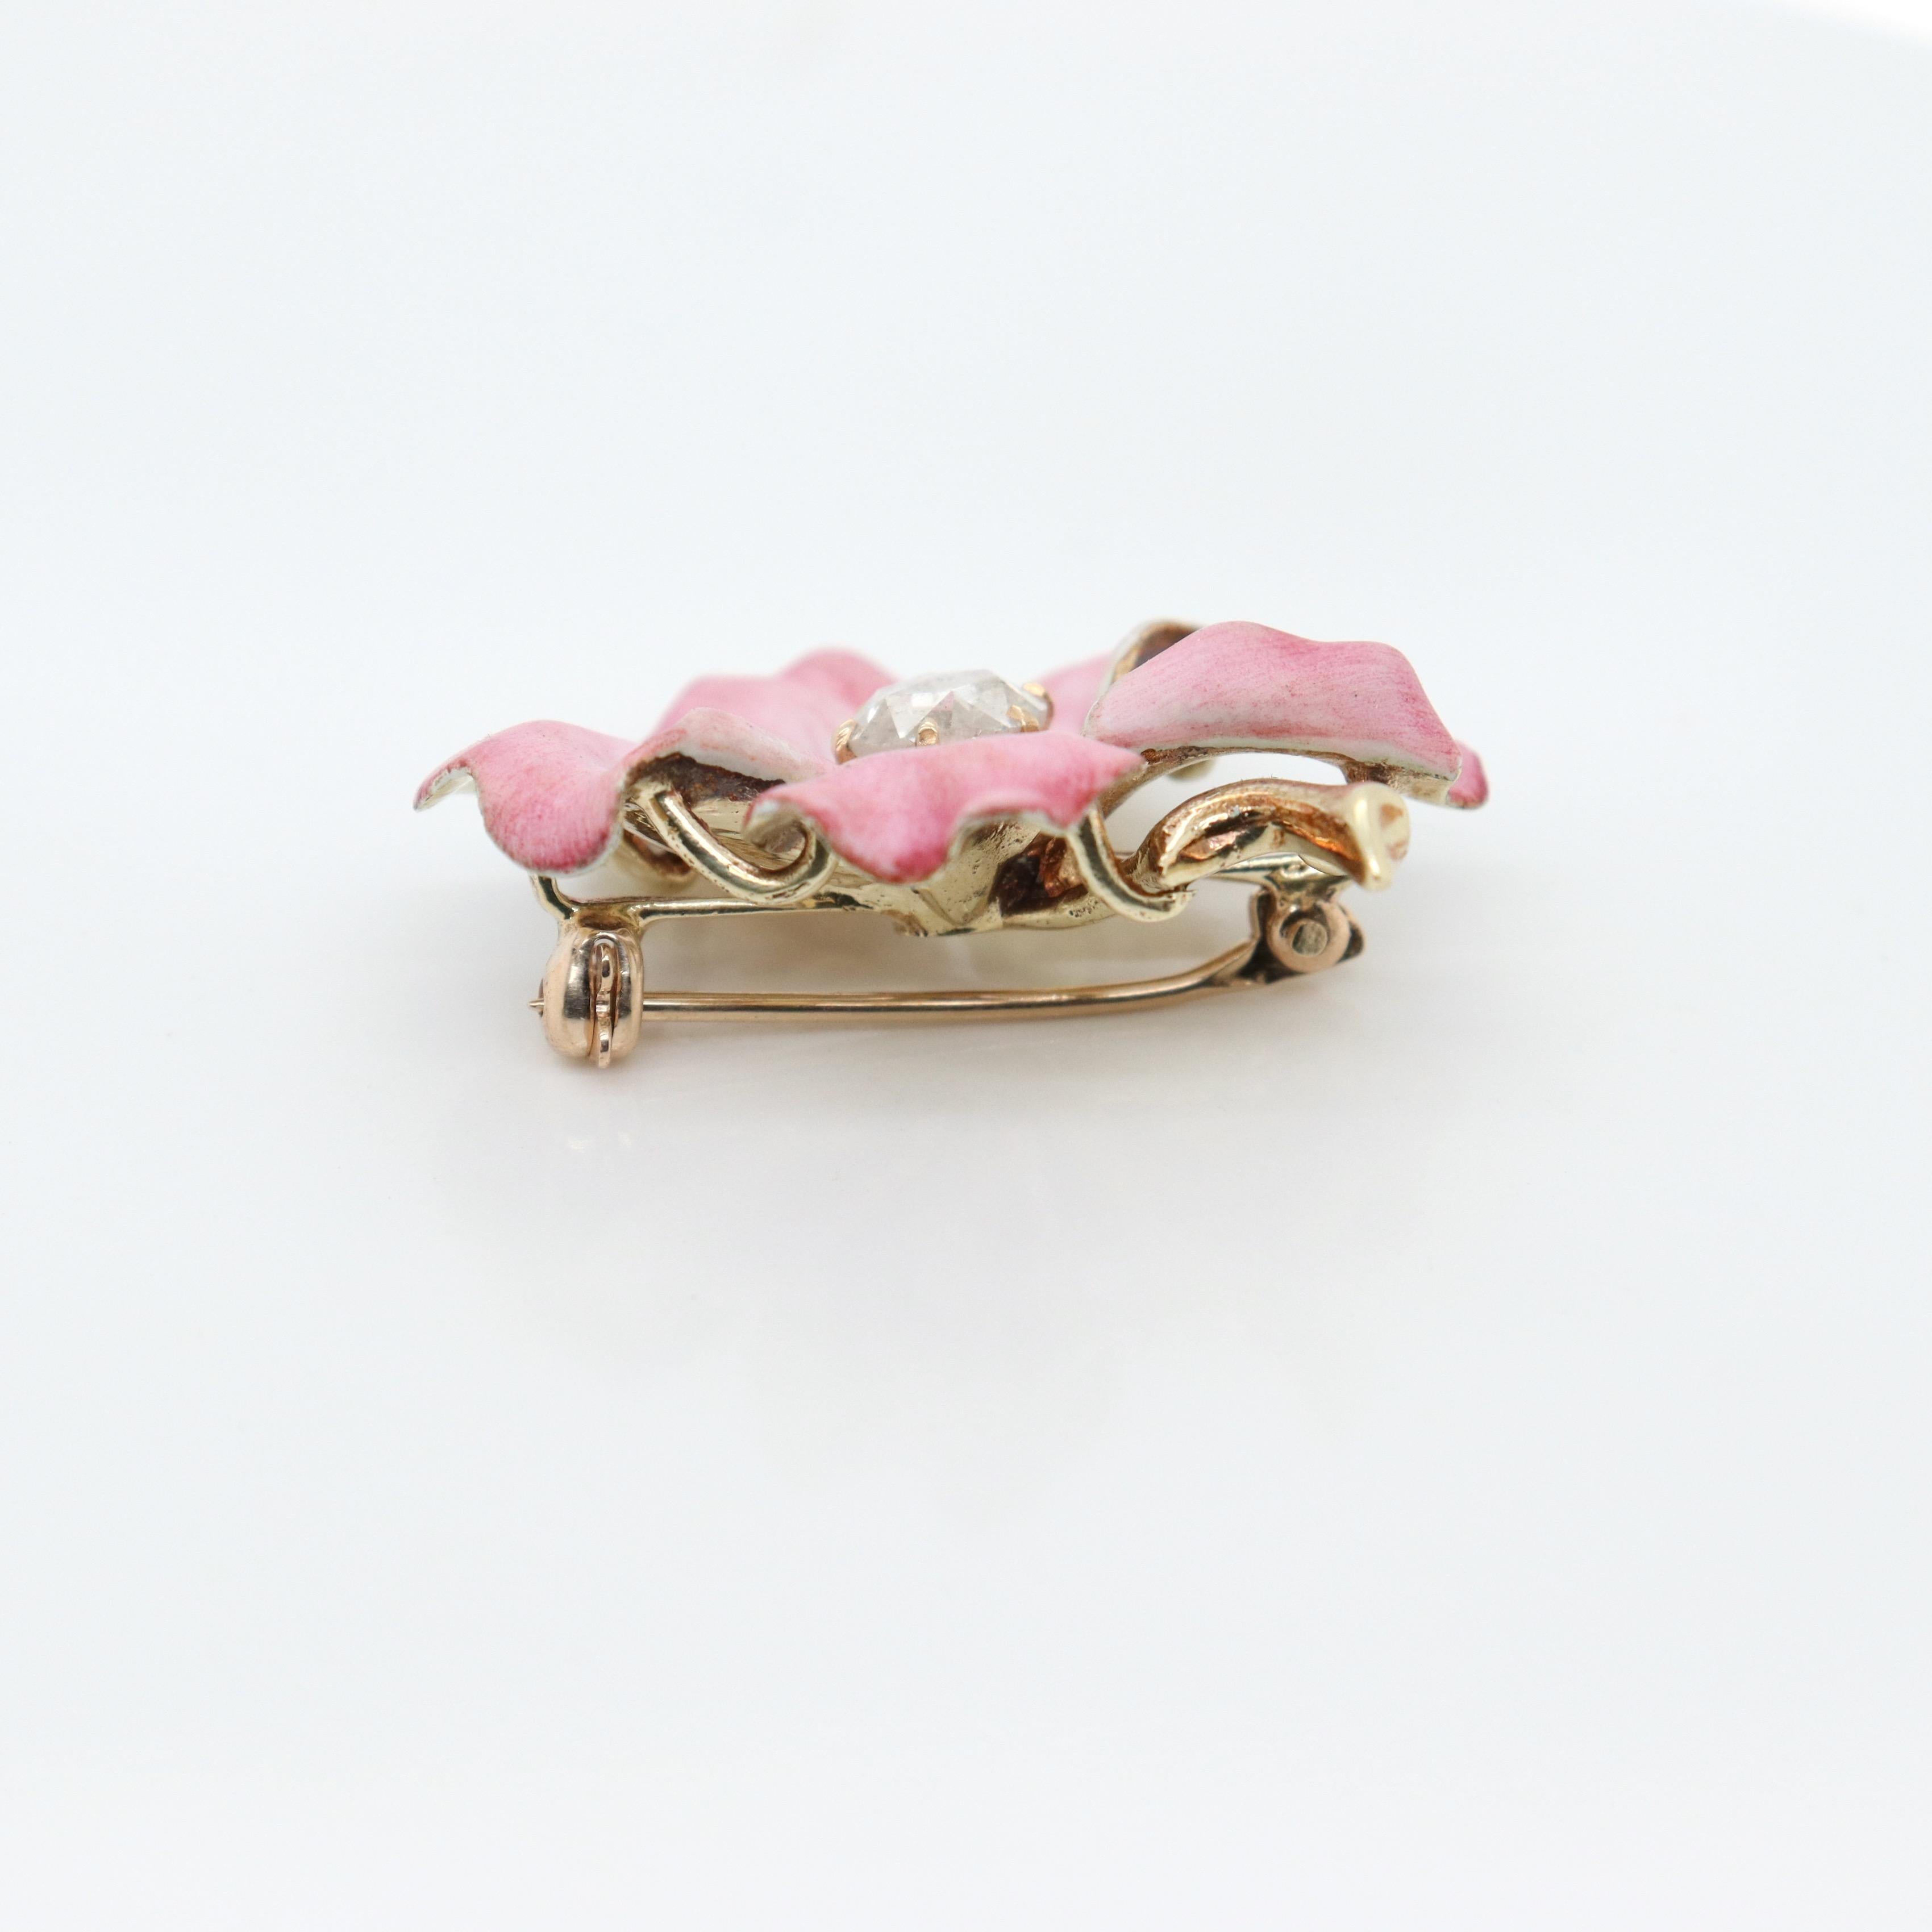 Women's Antique Figural 14k Gold, Enamel, & Rose Cut Diamond Pansy Brooch or Pin